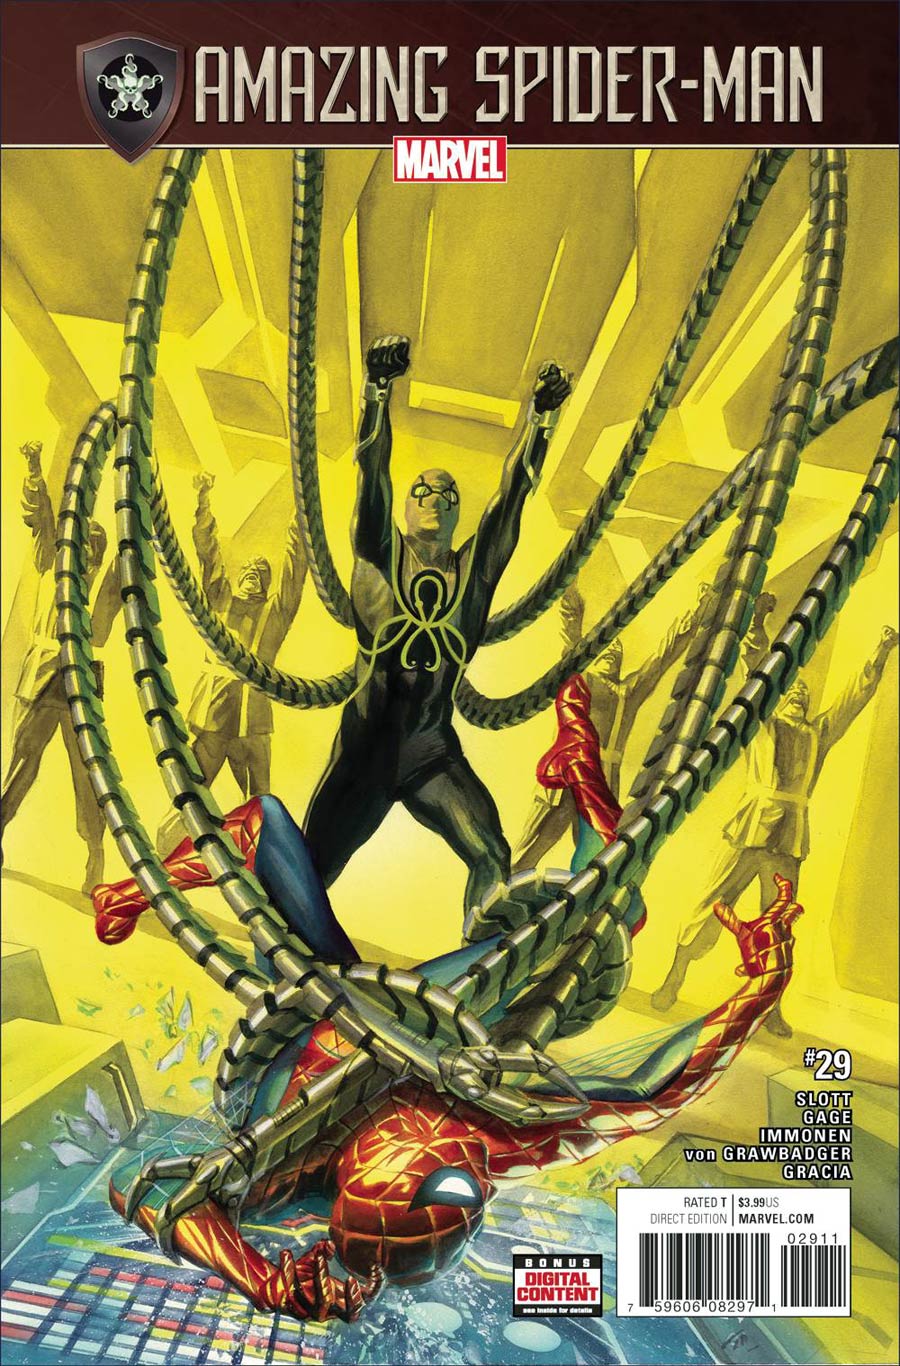 Amazing Spider-Man Vol 4 #29 Cover A Regular Alex Ross Cover (Secret Empire Tie-In)